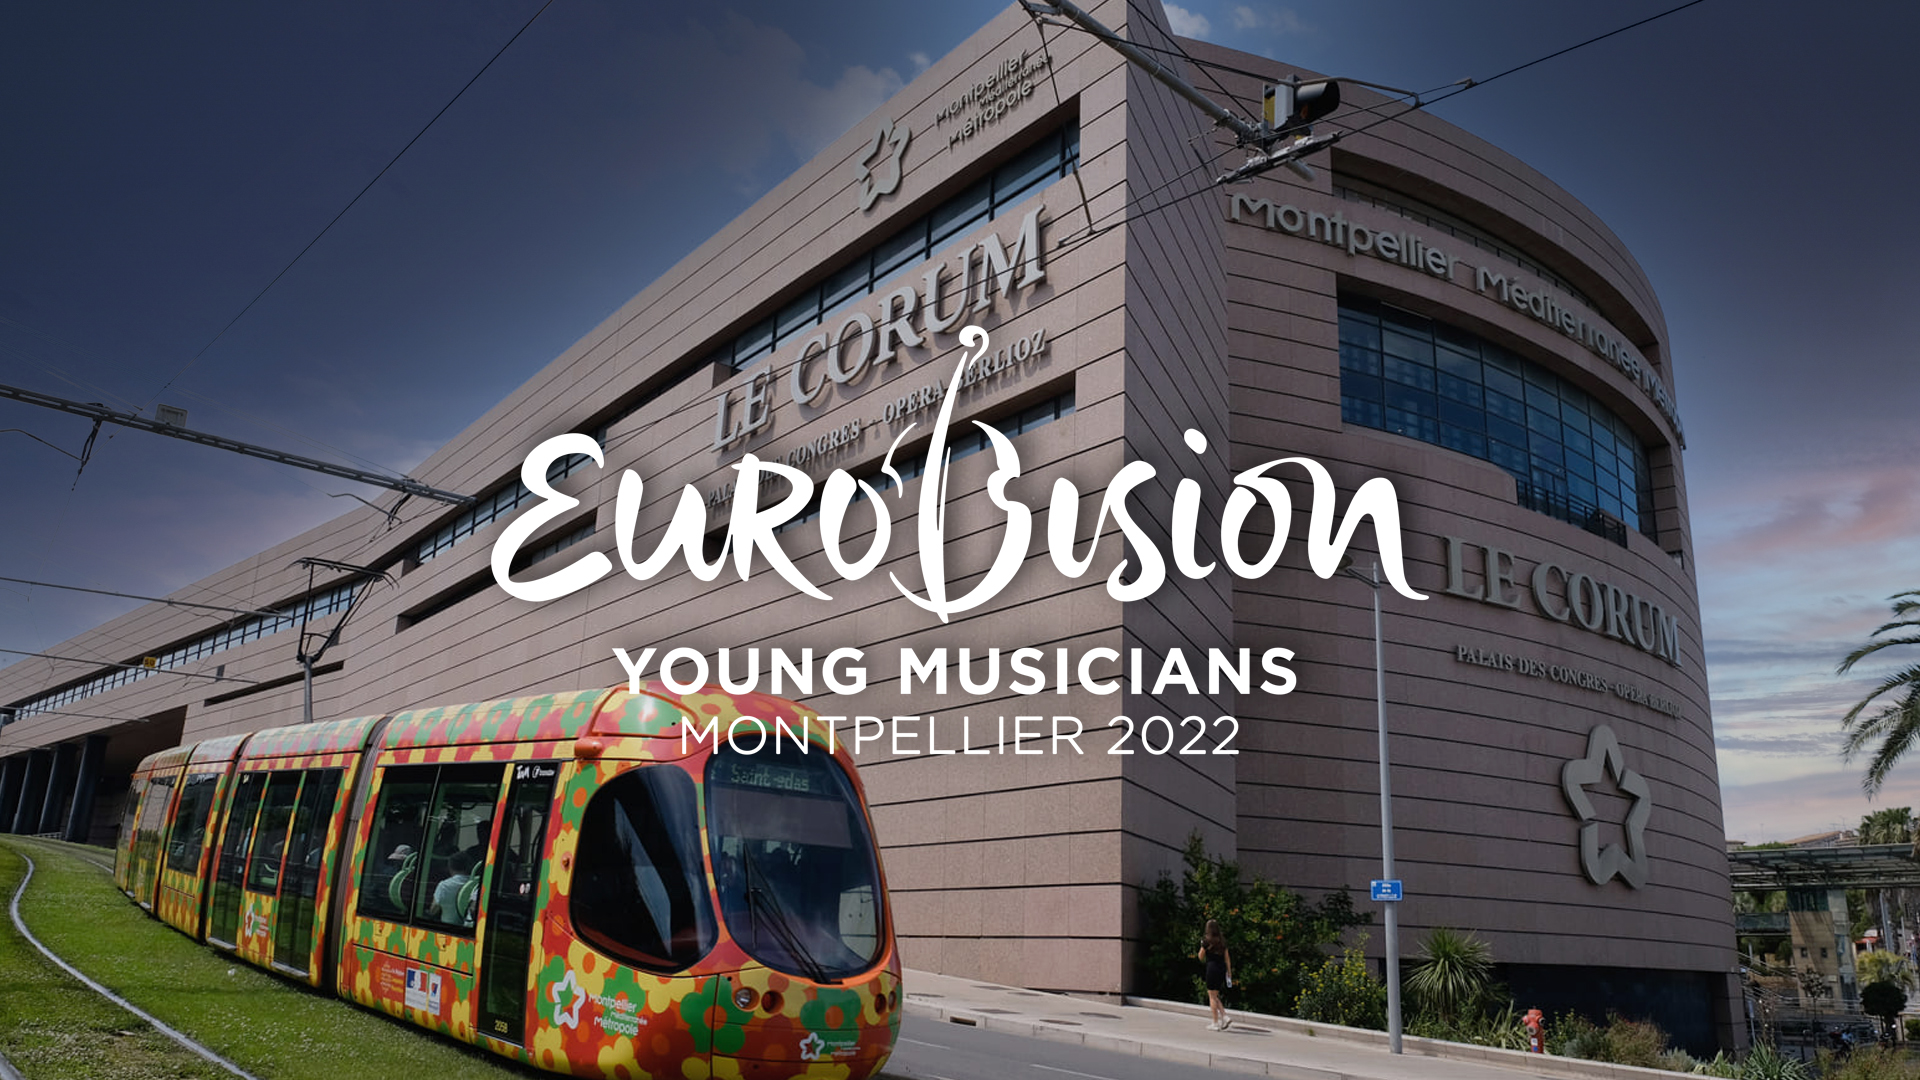 Conoce a los participantes de Eurovision Young Musicians 2022 (Parte 2)